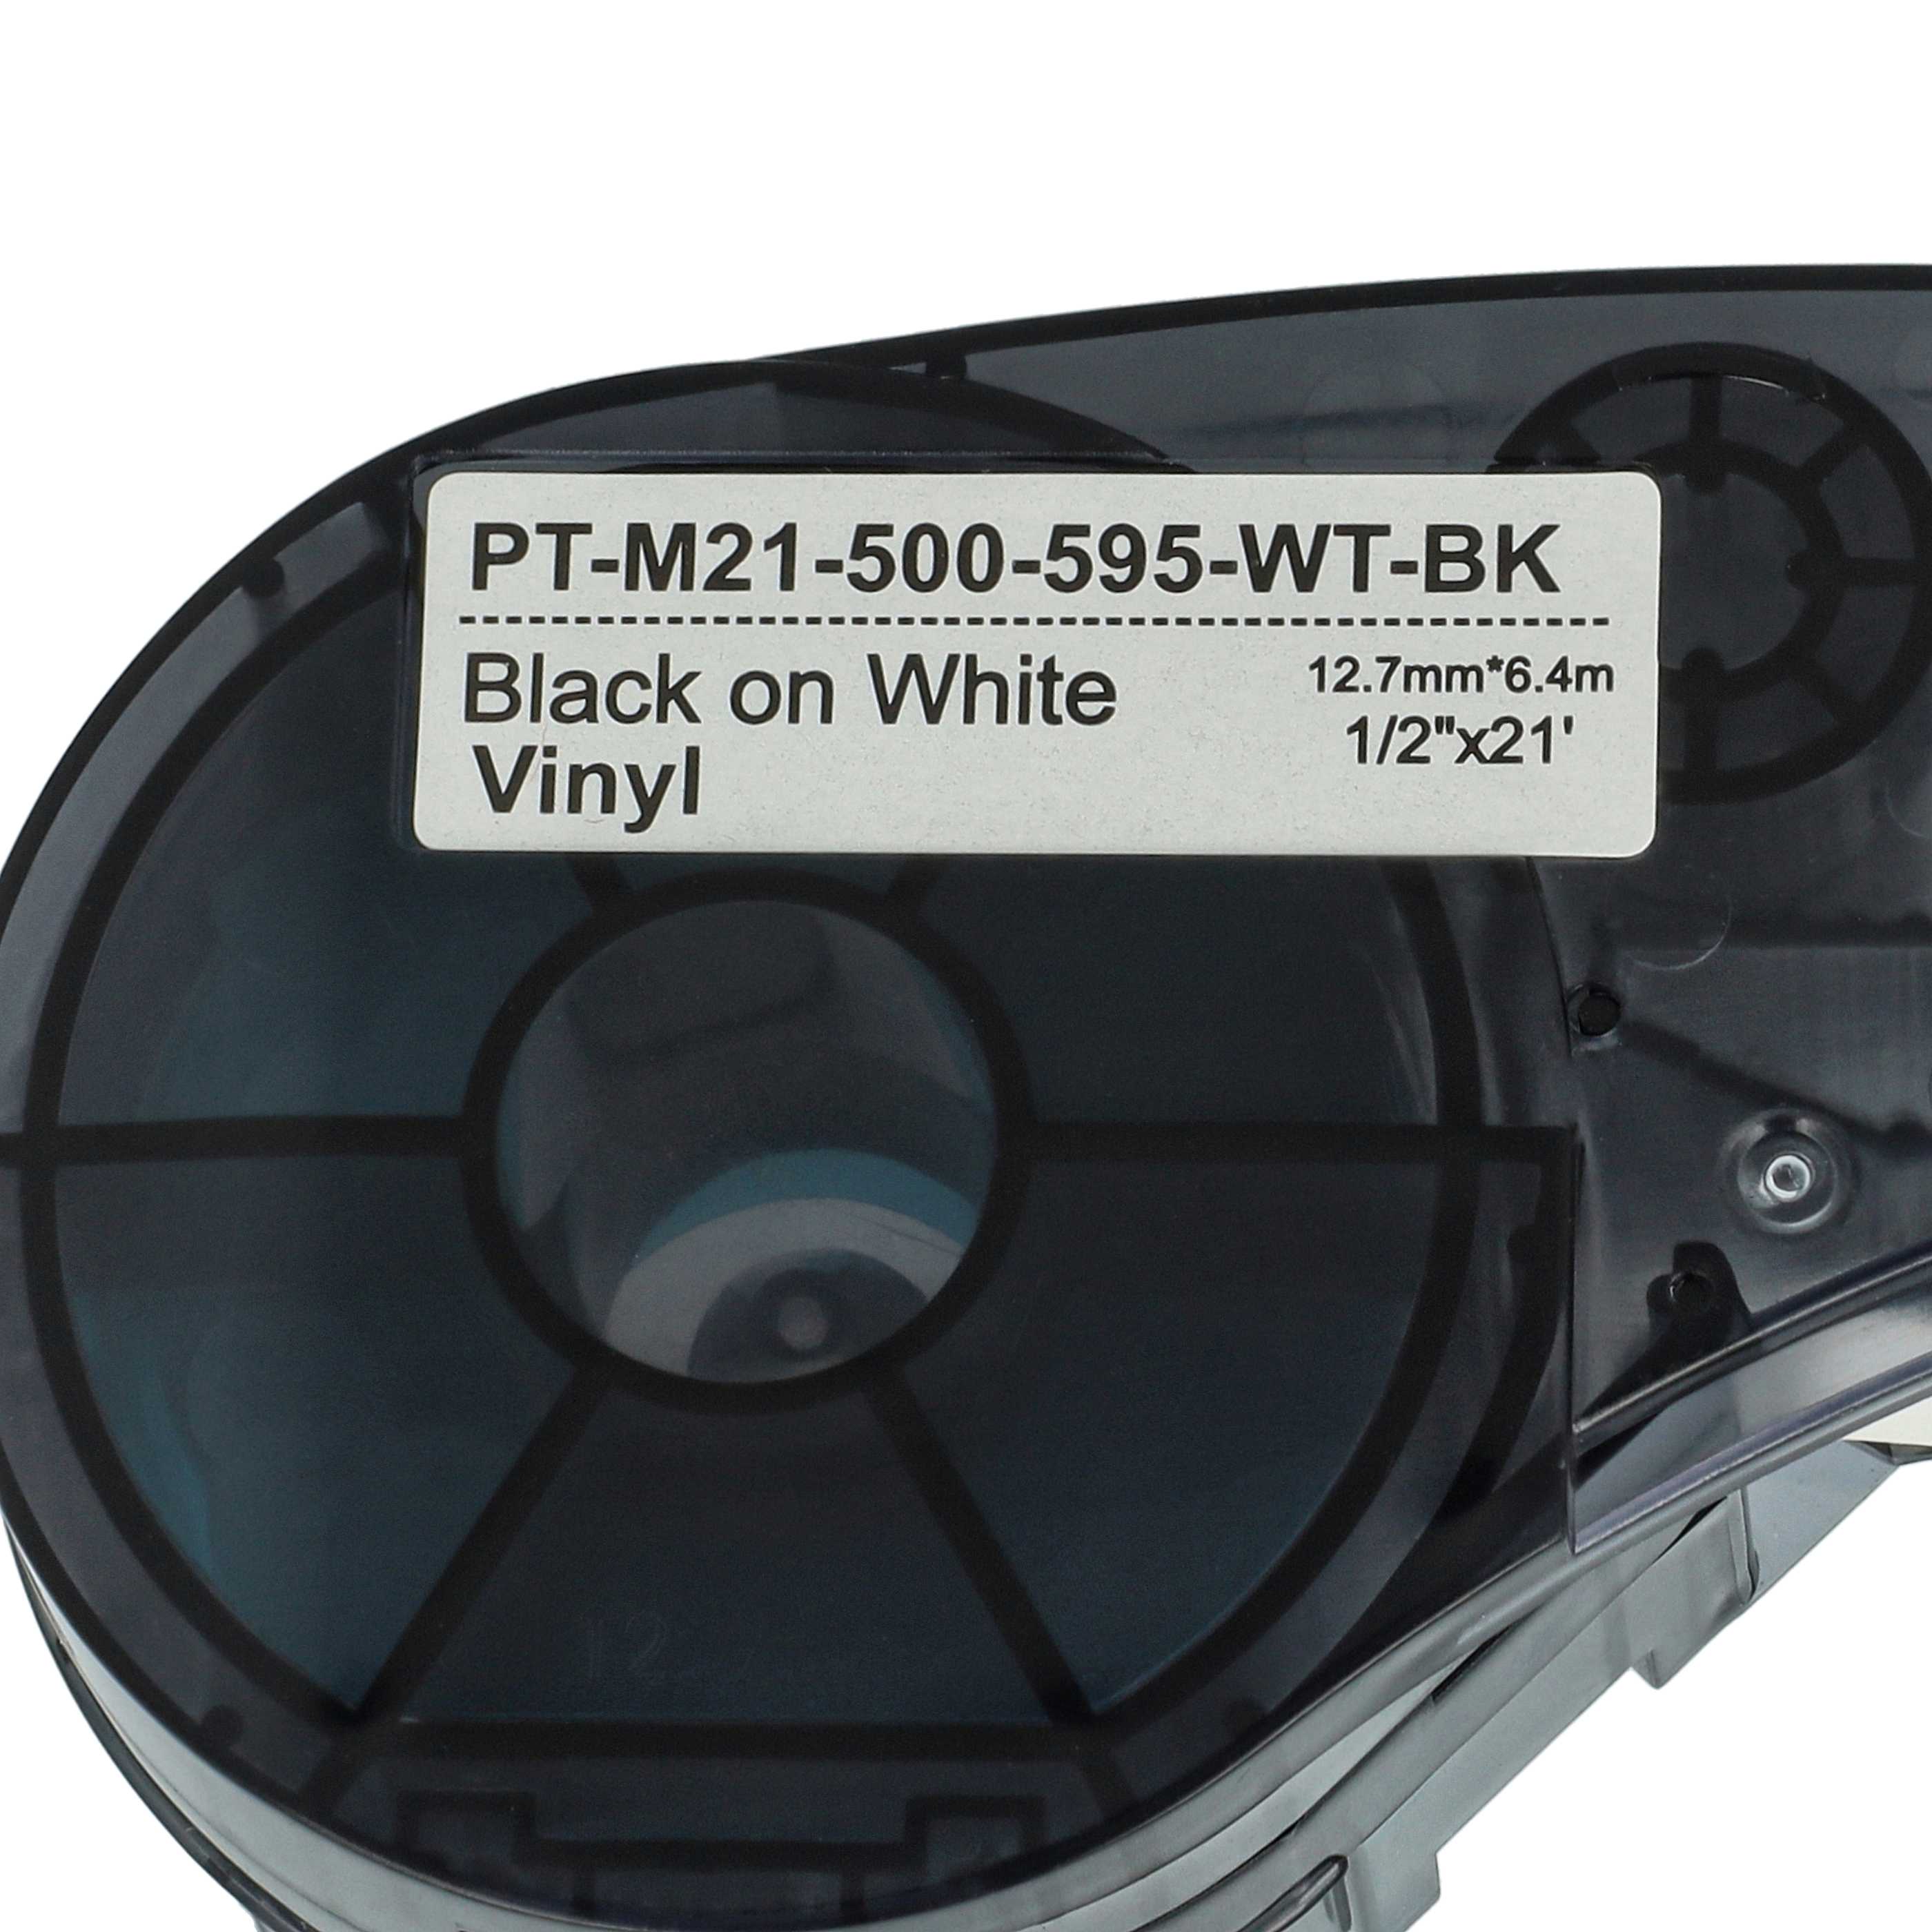 5x Casete cinta escritura reemplaza Brady M21-500-595-WT Negro su Blanco